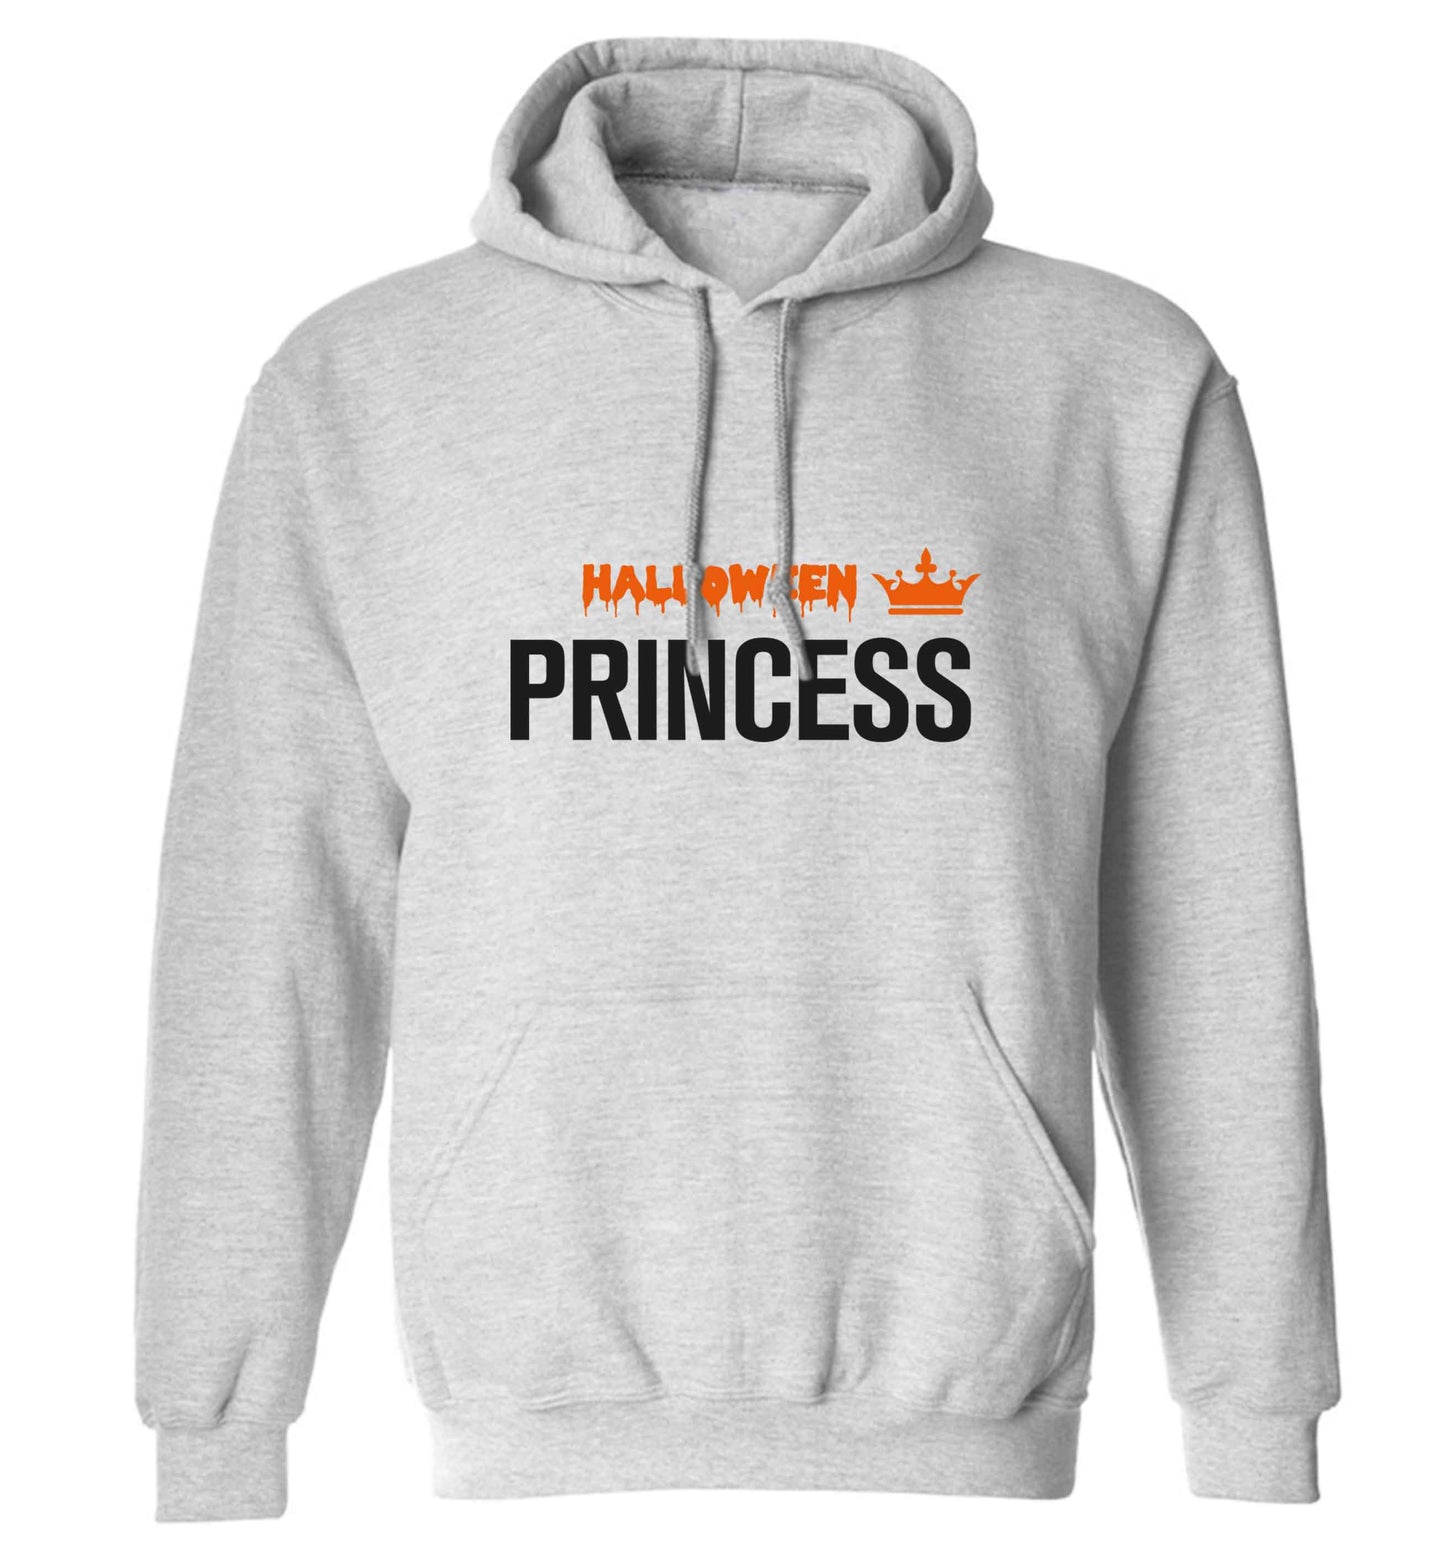 Halloween princess adults unisex grey hoodie 2XL